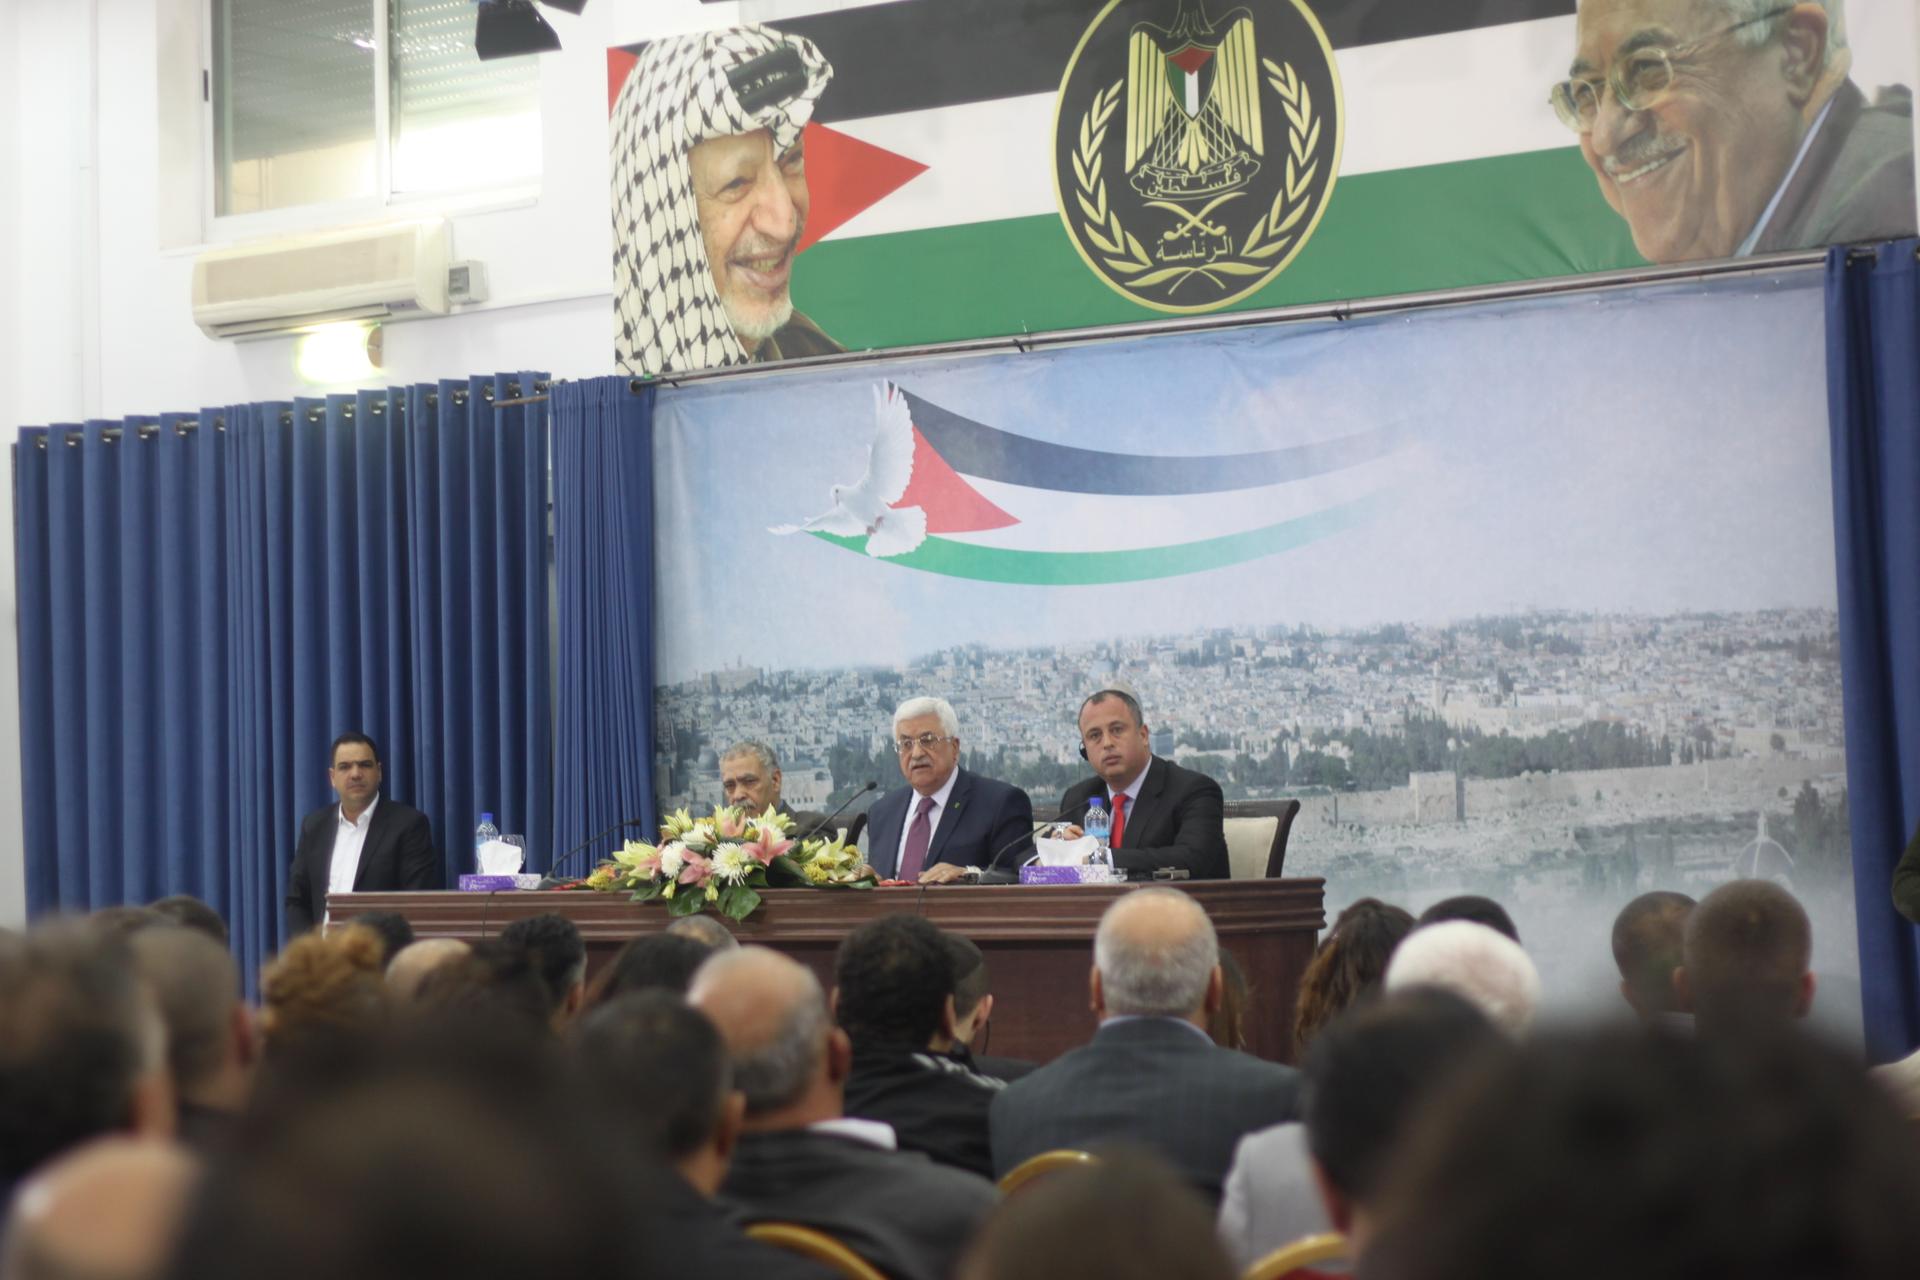 Palestinian President Mahmoud Abbas (center) addresses the crowd of Israelis.